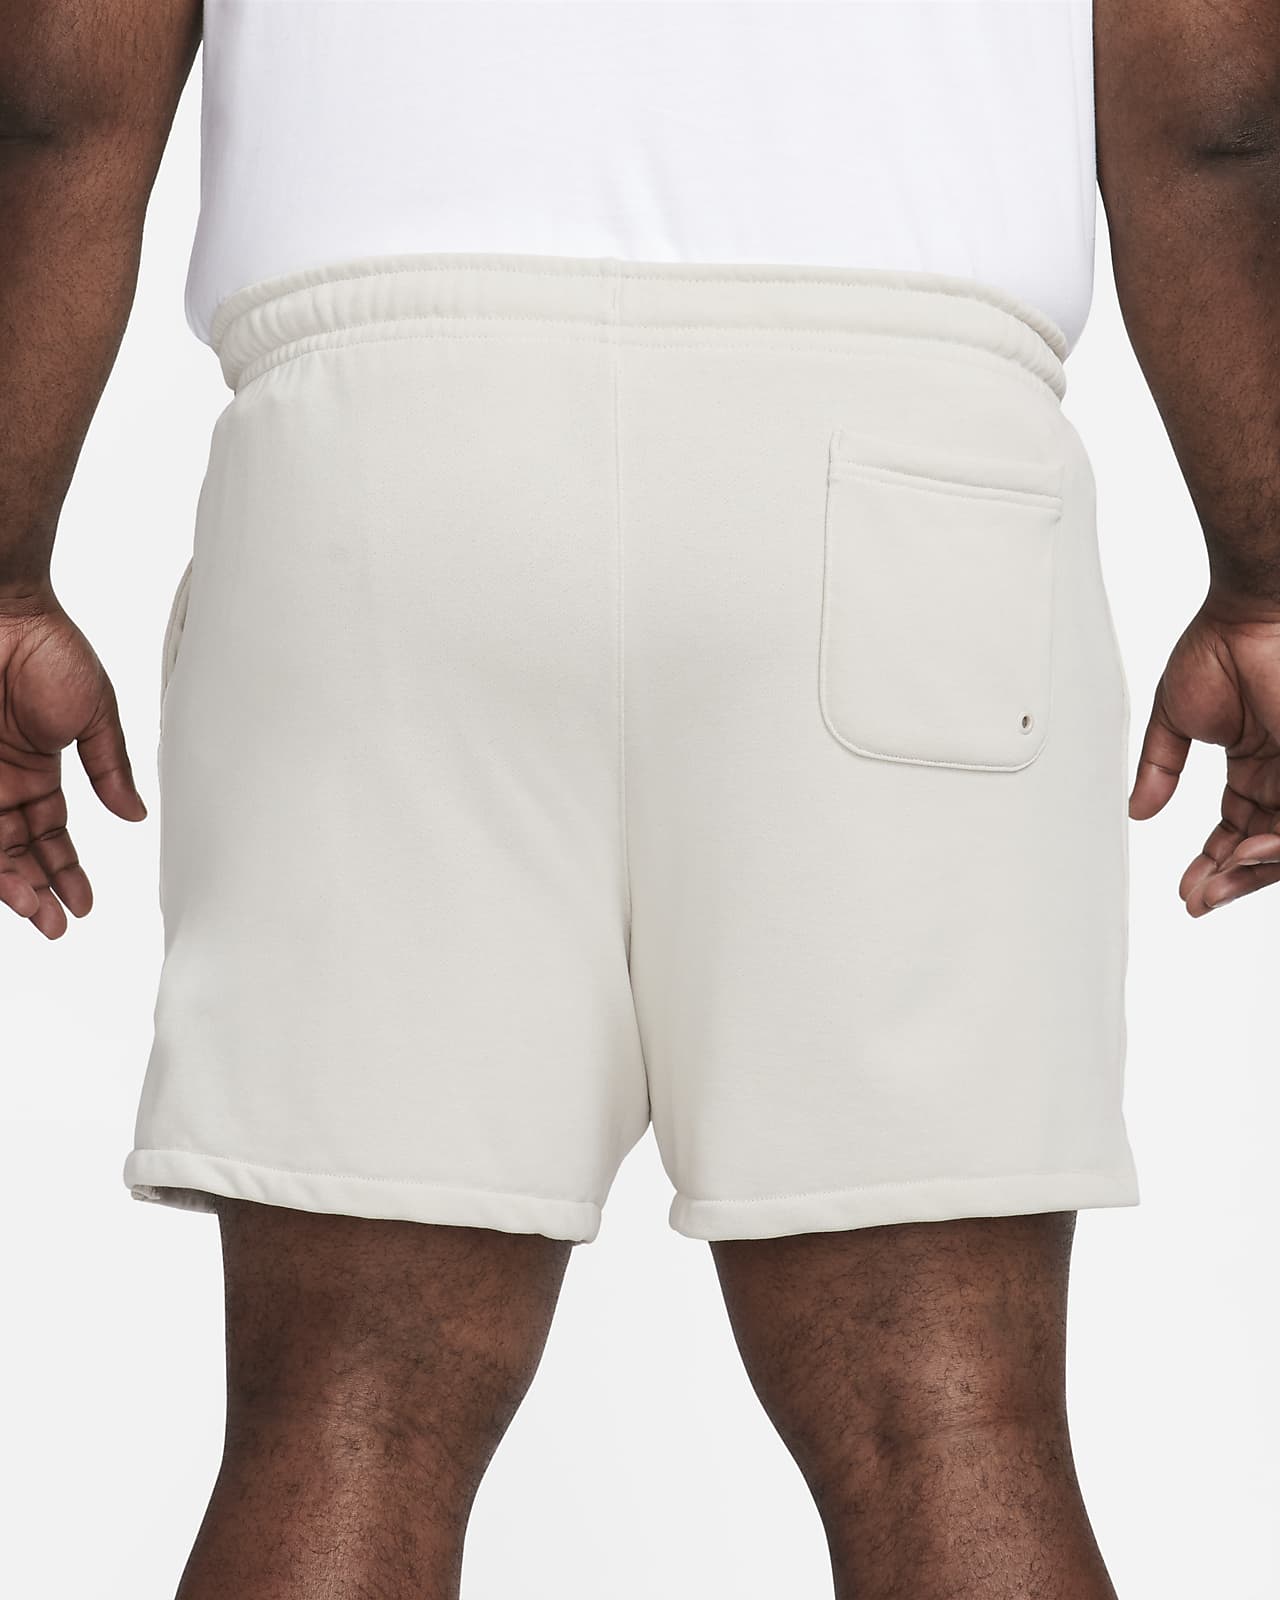 PURE CHAMP Mens Shorts 3 PK Tech Fleece Cotton Casual Lounge Sweat Gym  Shorts fo